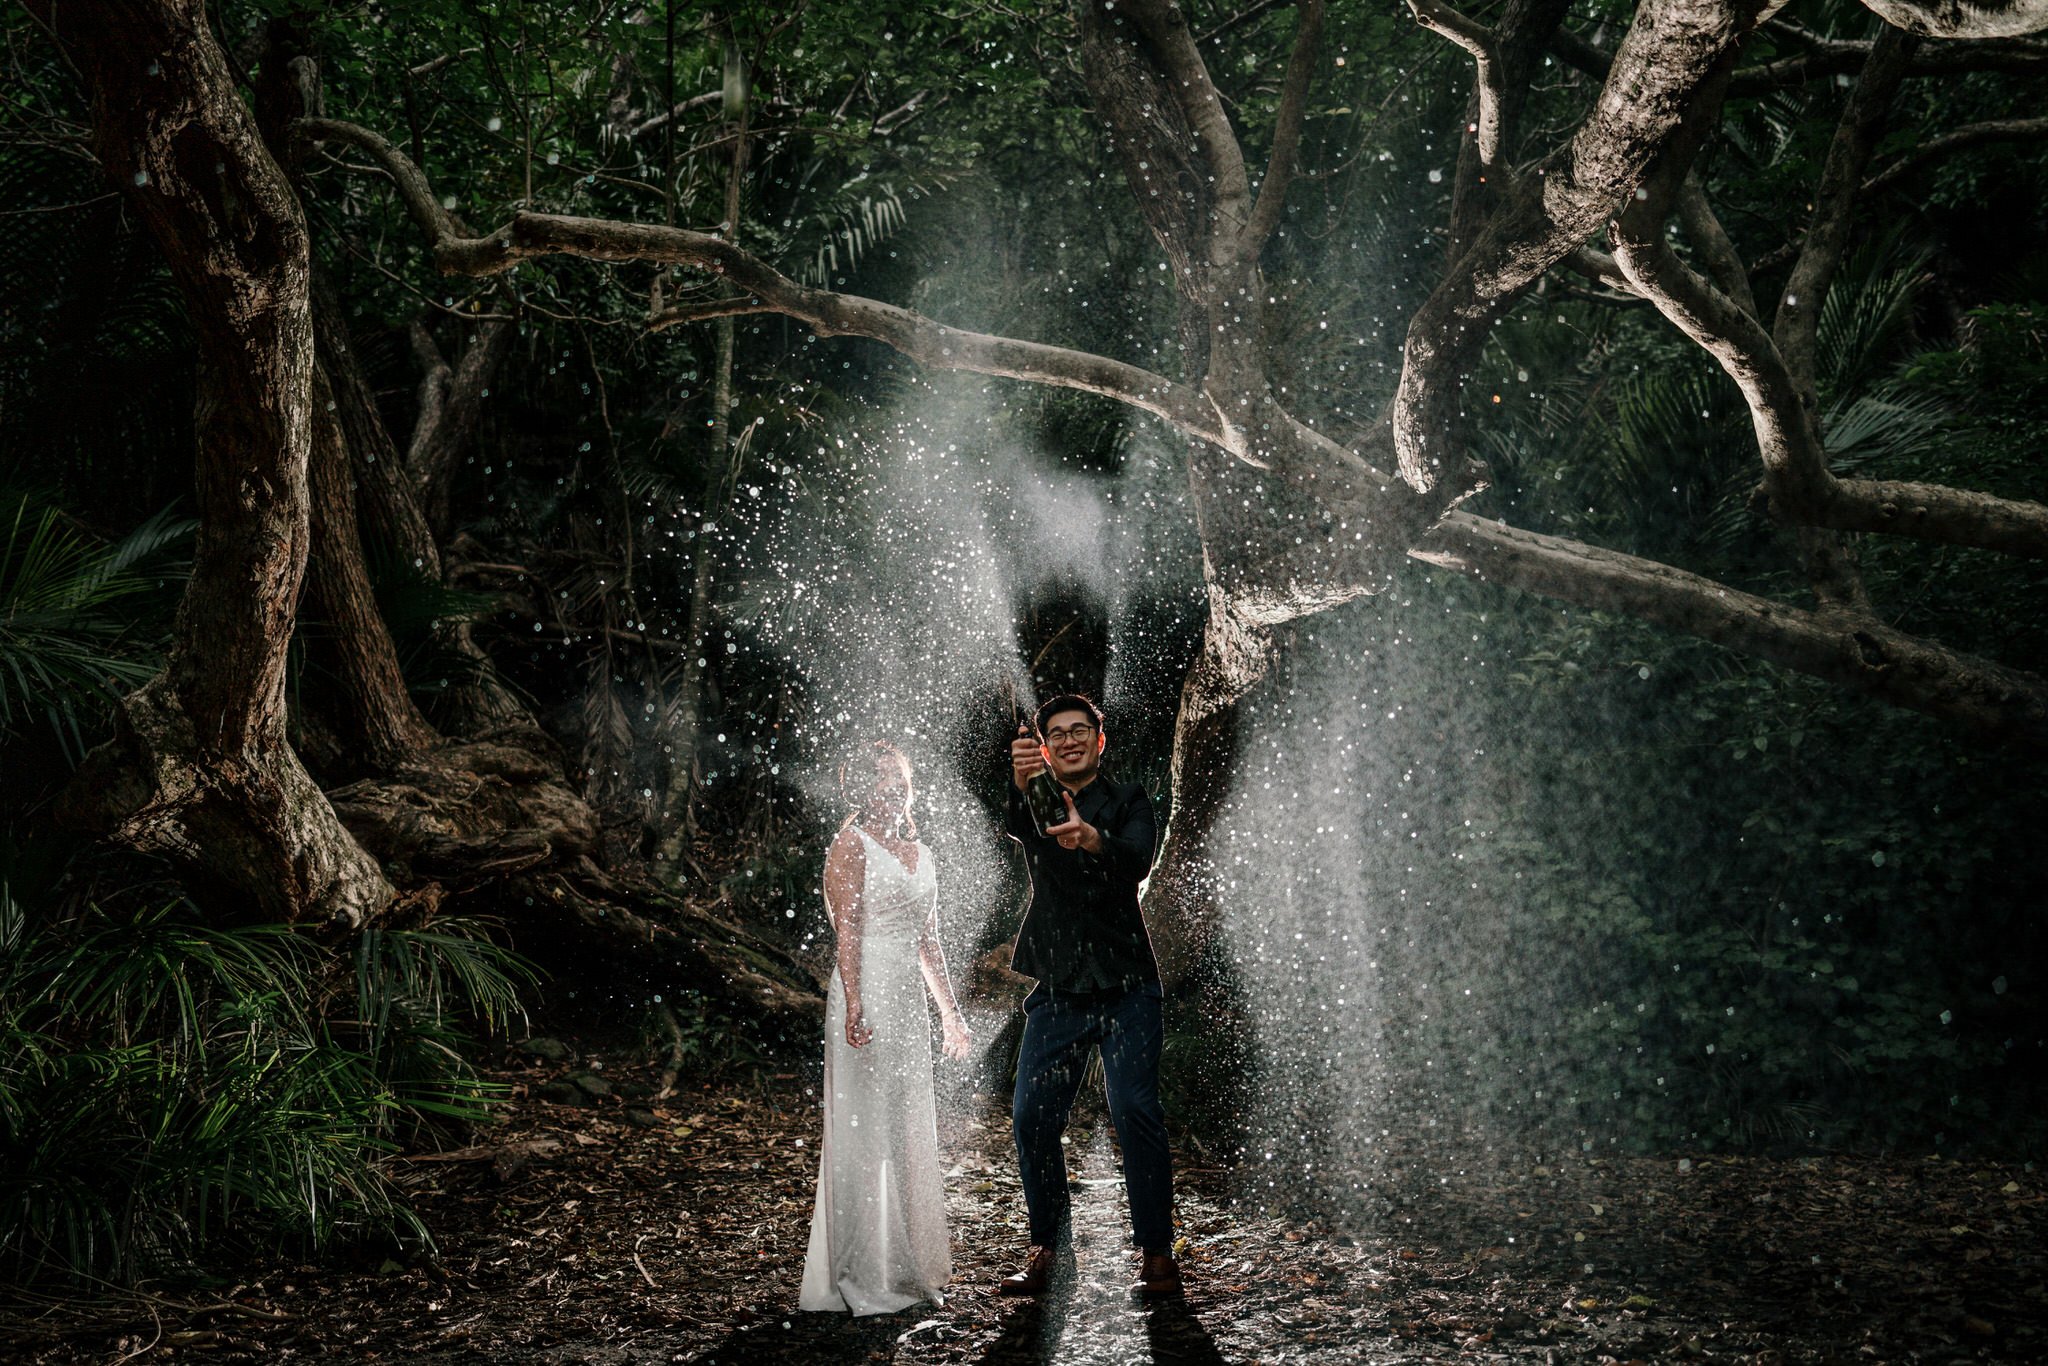 auckland-wedding-photographer-videographer-story-by-koo-koo's-jewelry-dear-white-productions-pre-wedding-engagement-photo-kare-karekare-falls-waterfall-beach-west-piha-muriwai-rain-night (34).JPG